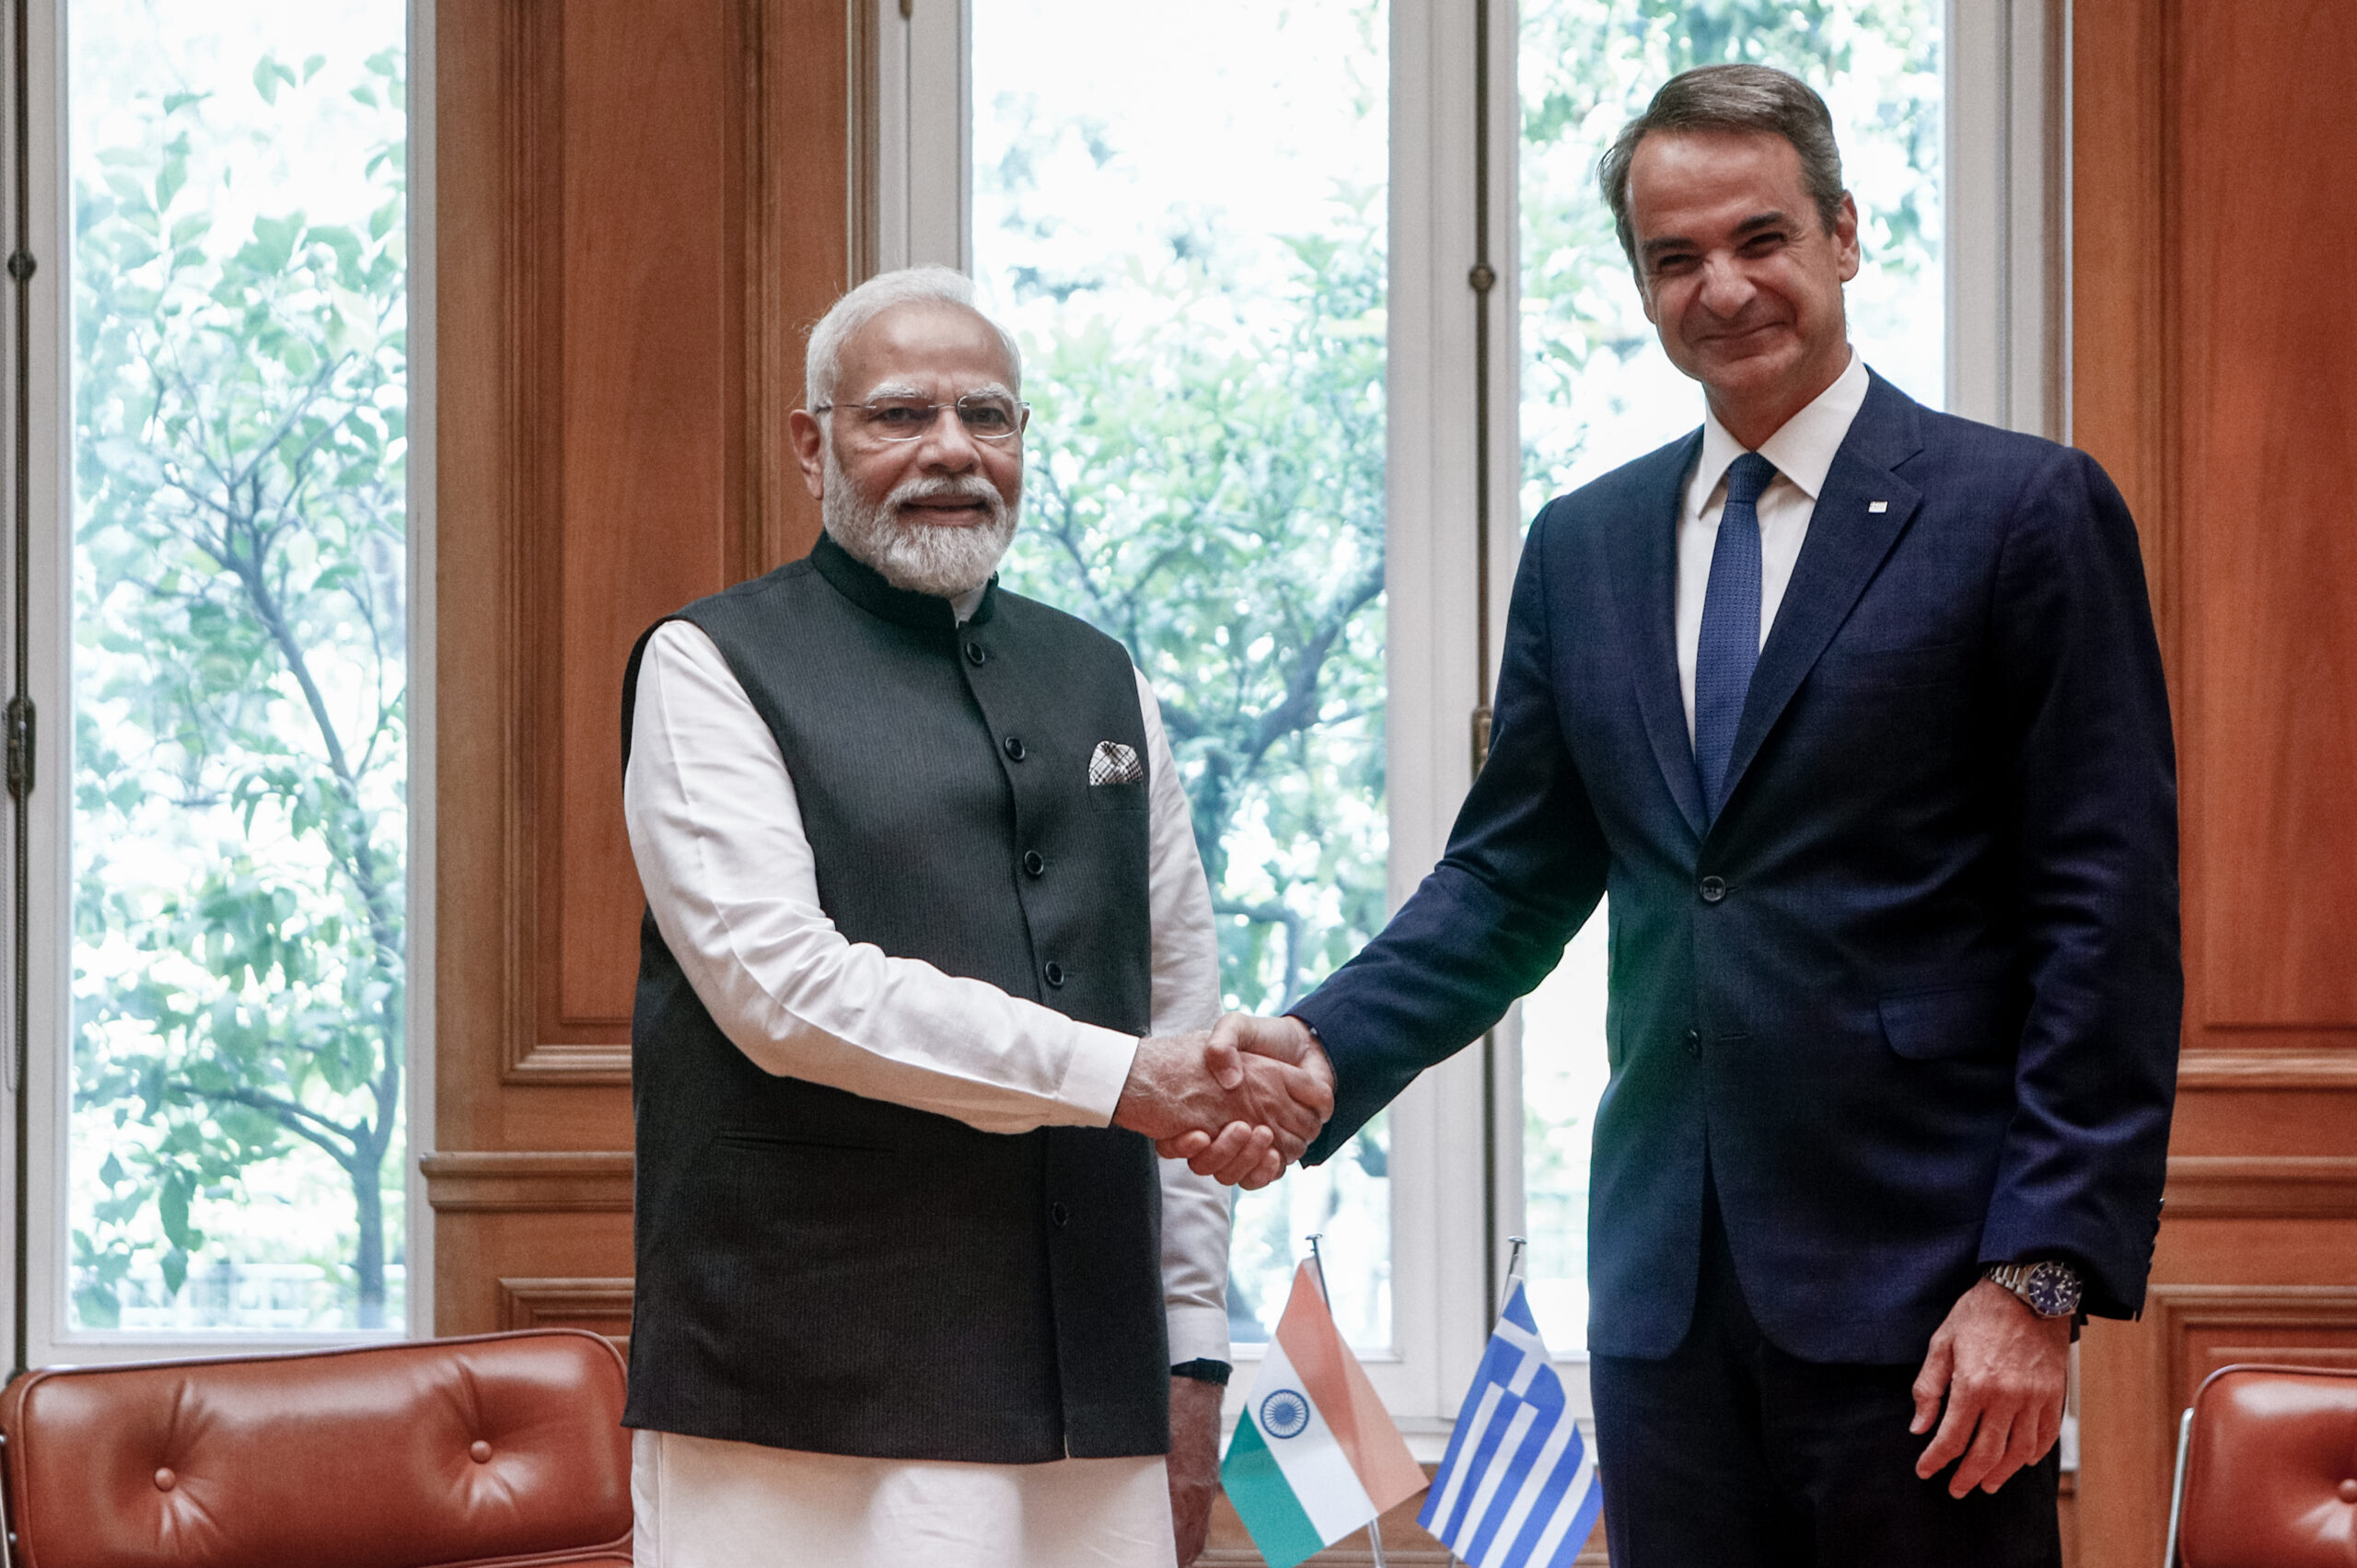 Live οι δηλώσεις των Πρωθυπουργών Ελλάδας και Ινδίας – Ιστορική επίσκεψη